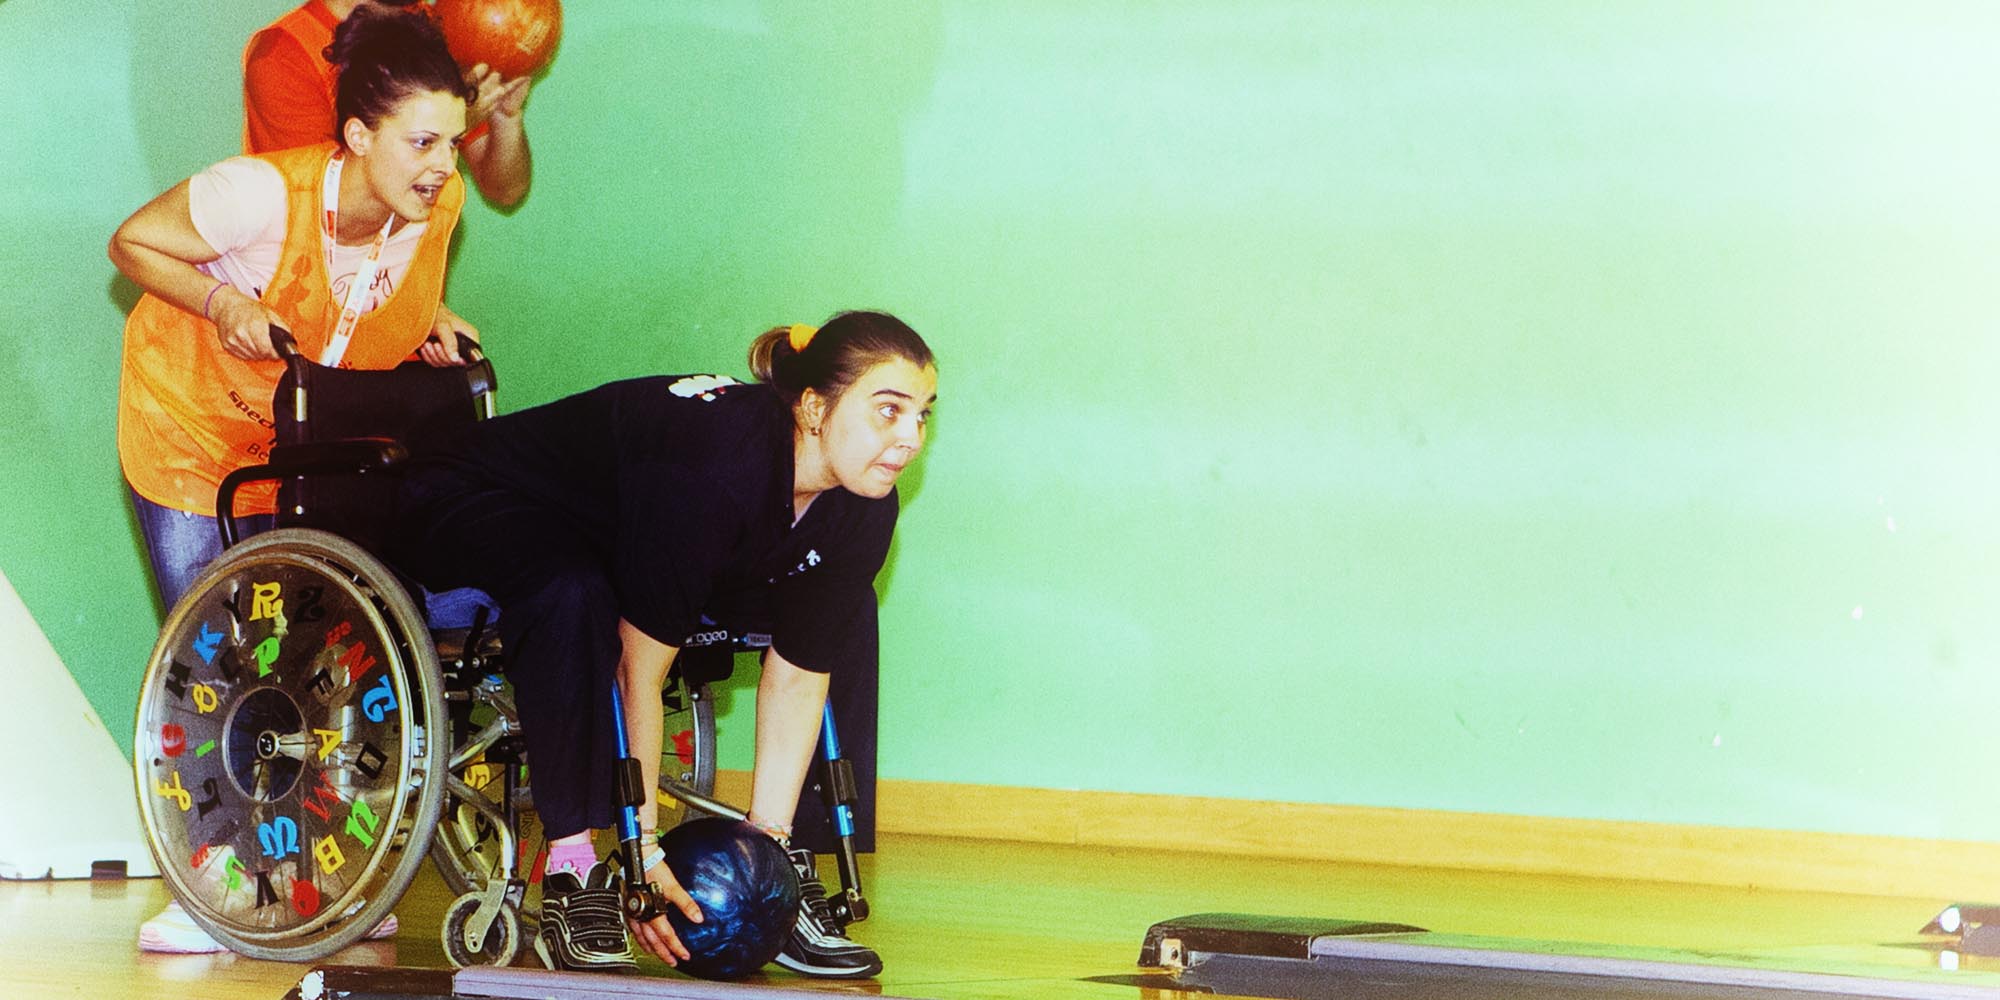 0332S sport lombardia02 - Assistenza disabili, una serata al bowling